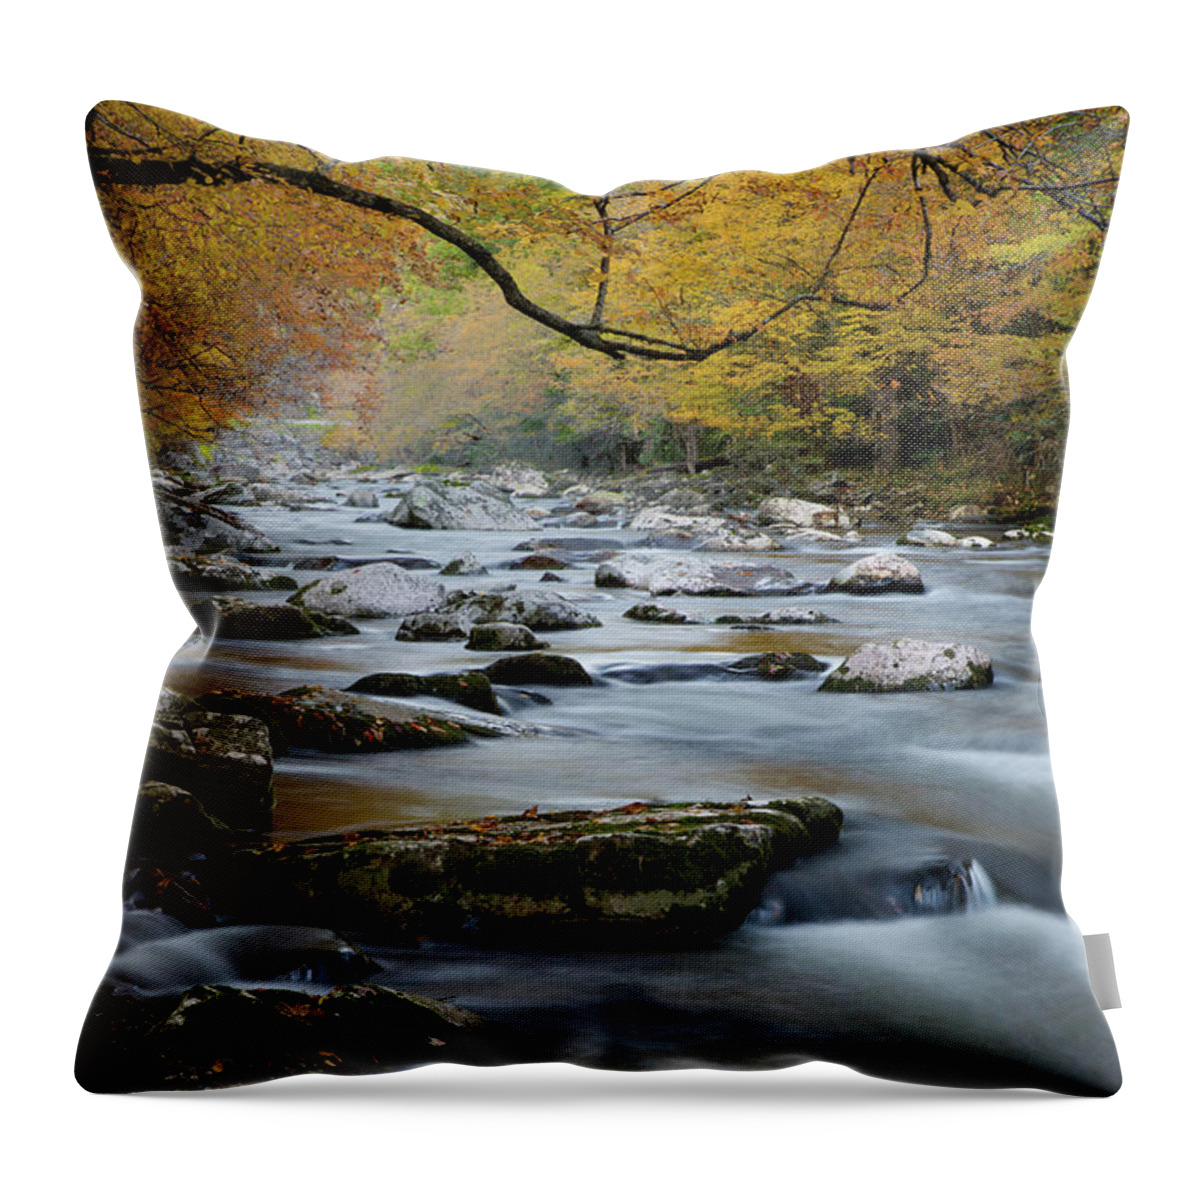 Nunweiler Throw Pillow featuring the photograph Little River 2 by Nunweiler Photography